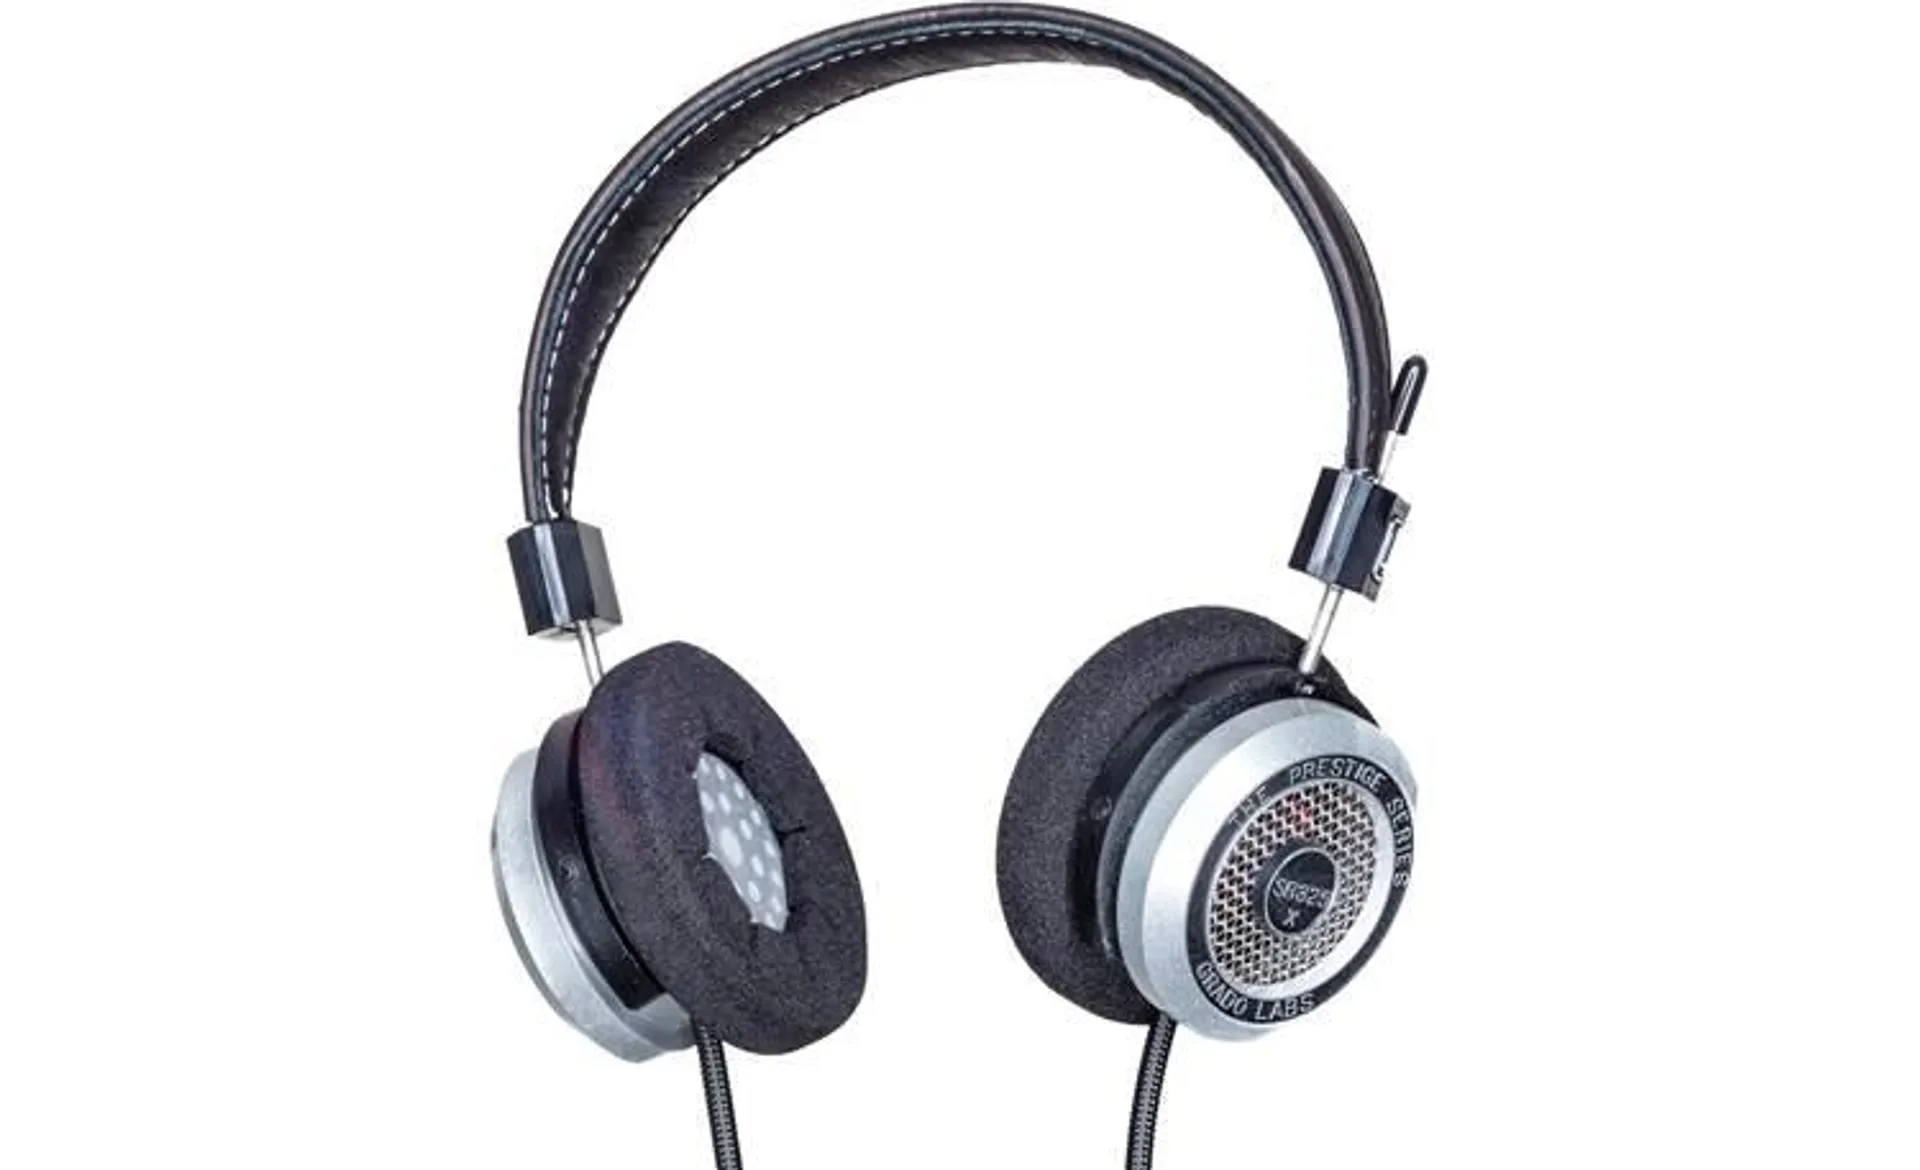 Grado SR 325x Prestige Series on-ear headphones